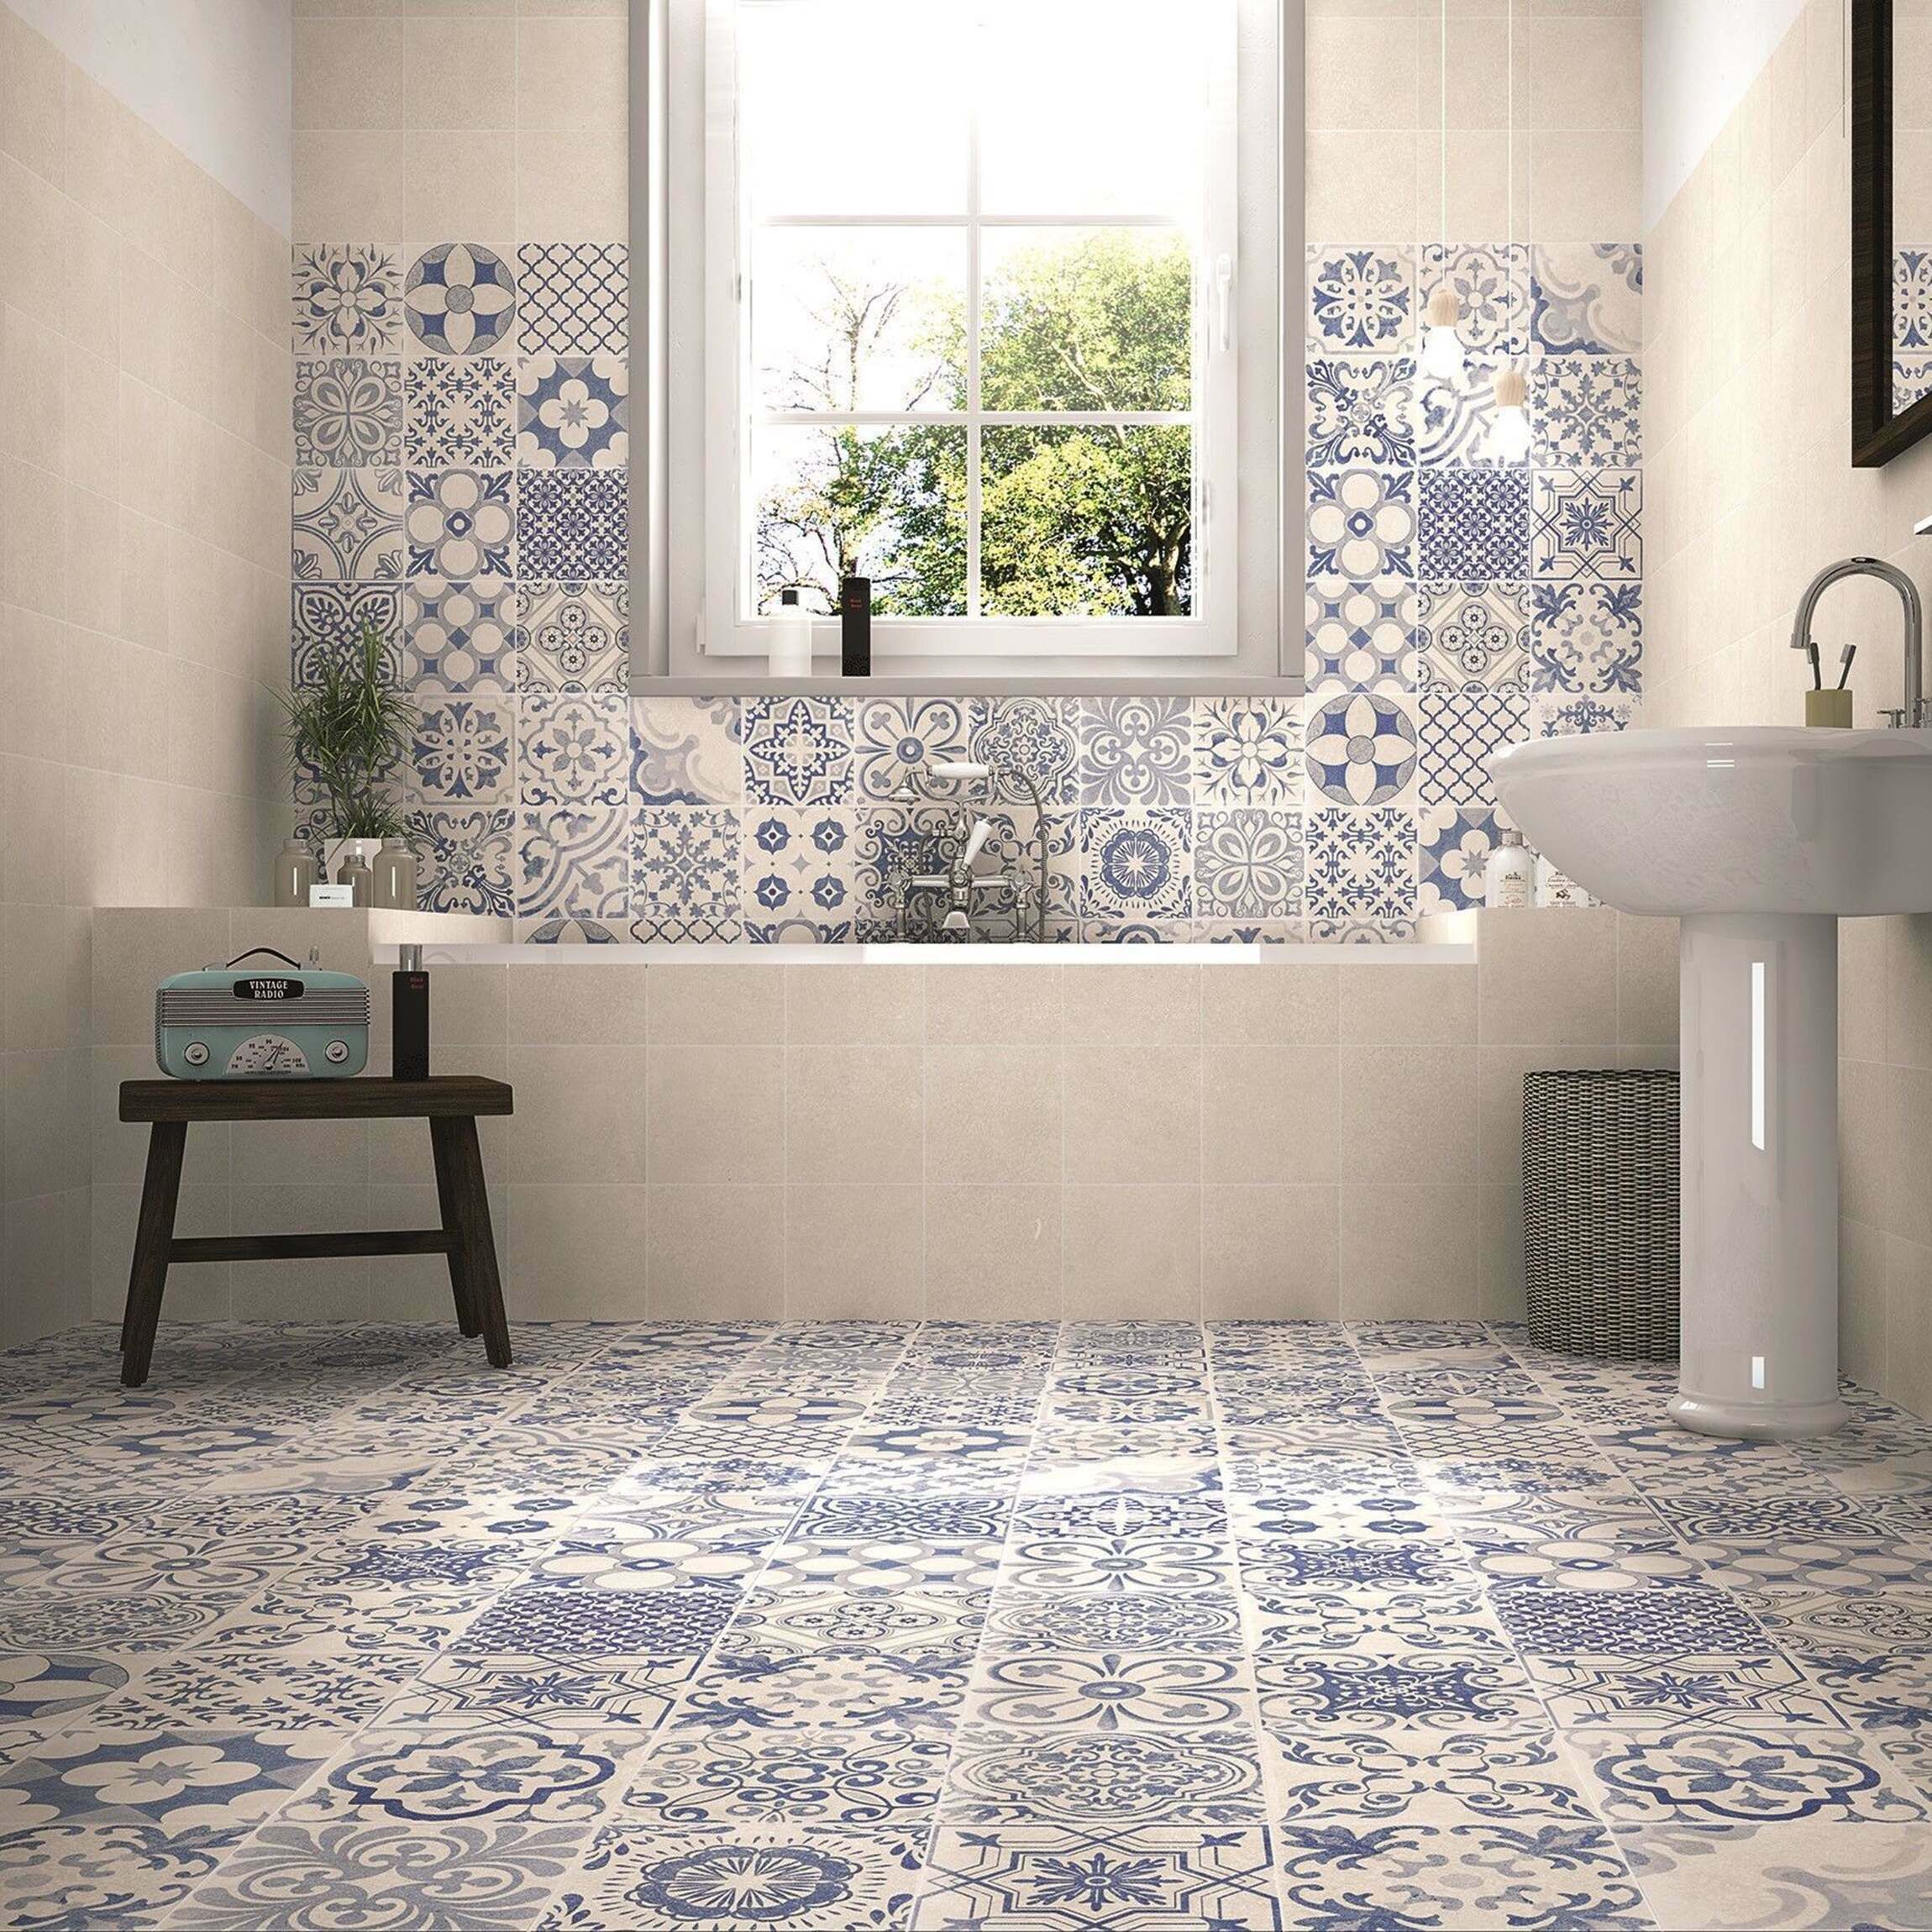 Skyros Delft Blue Wall And Floor Tile, Vintage Bathroom Tiles Uk